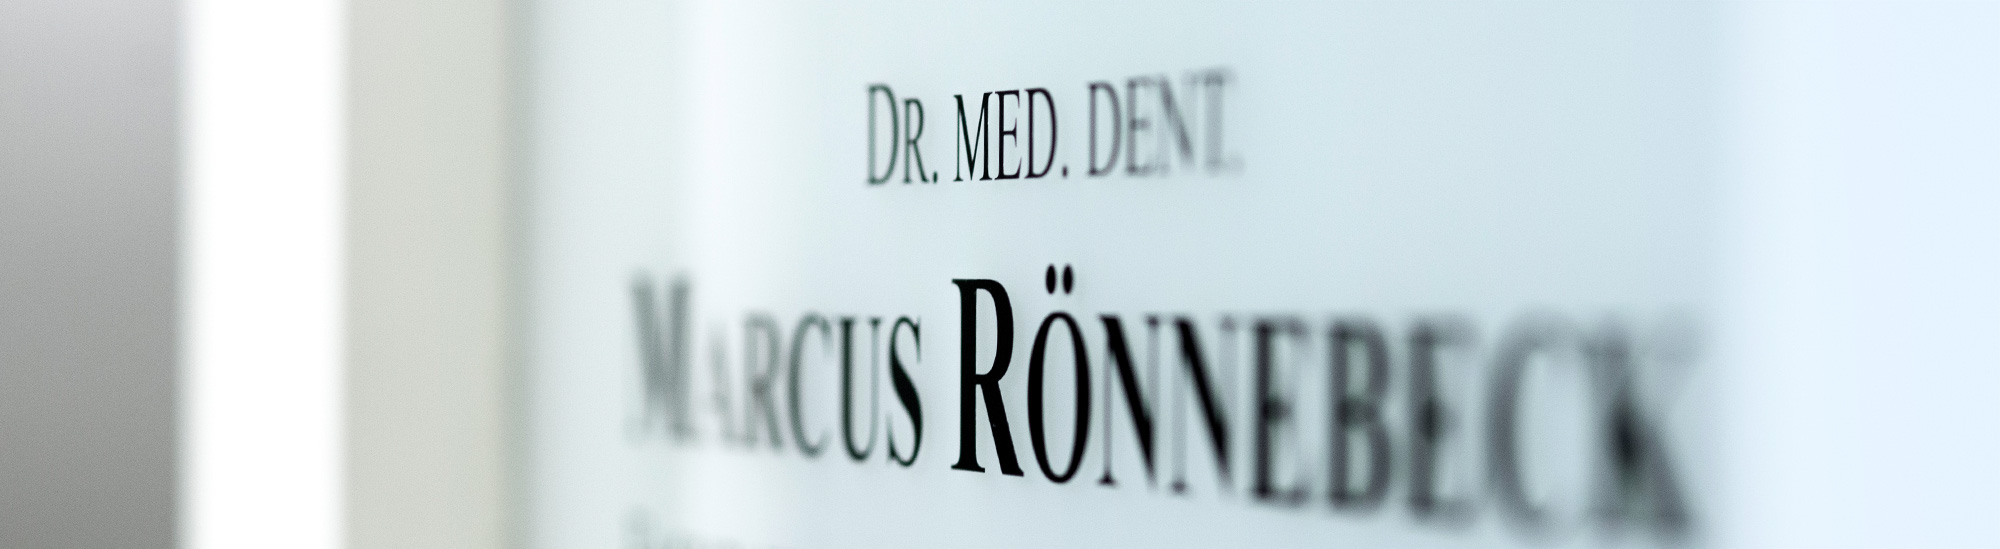 Dr. med. dent Marcus Rönnebeck - Kieferorthopäde in 72764 Reutlingen, Gartenstraße 31 / Kaiserpassage